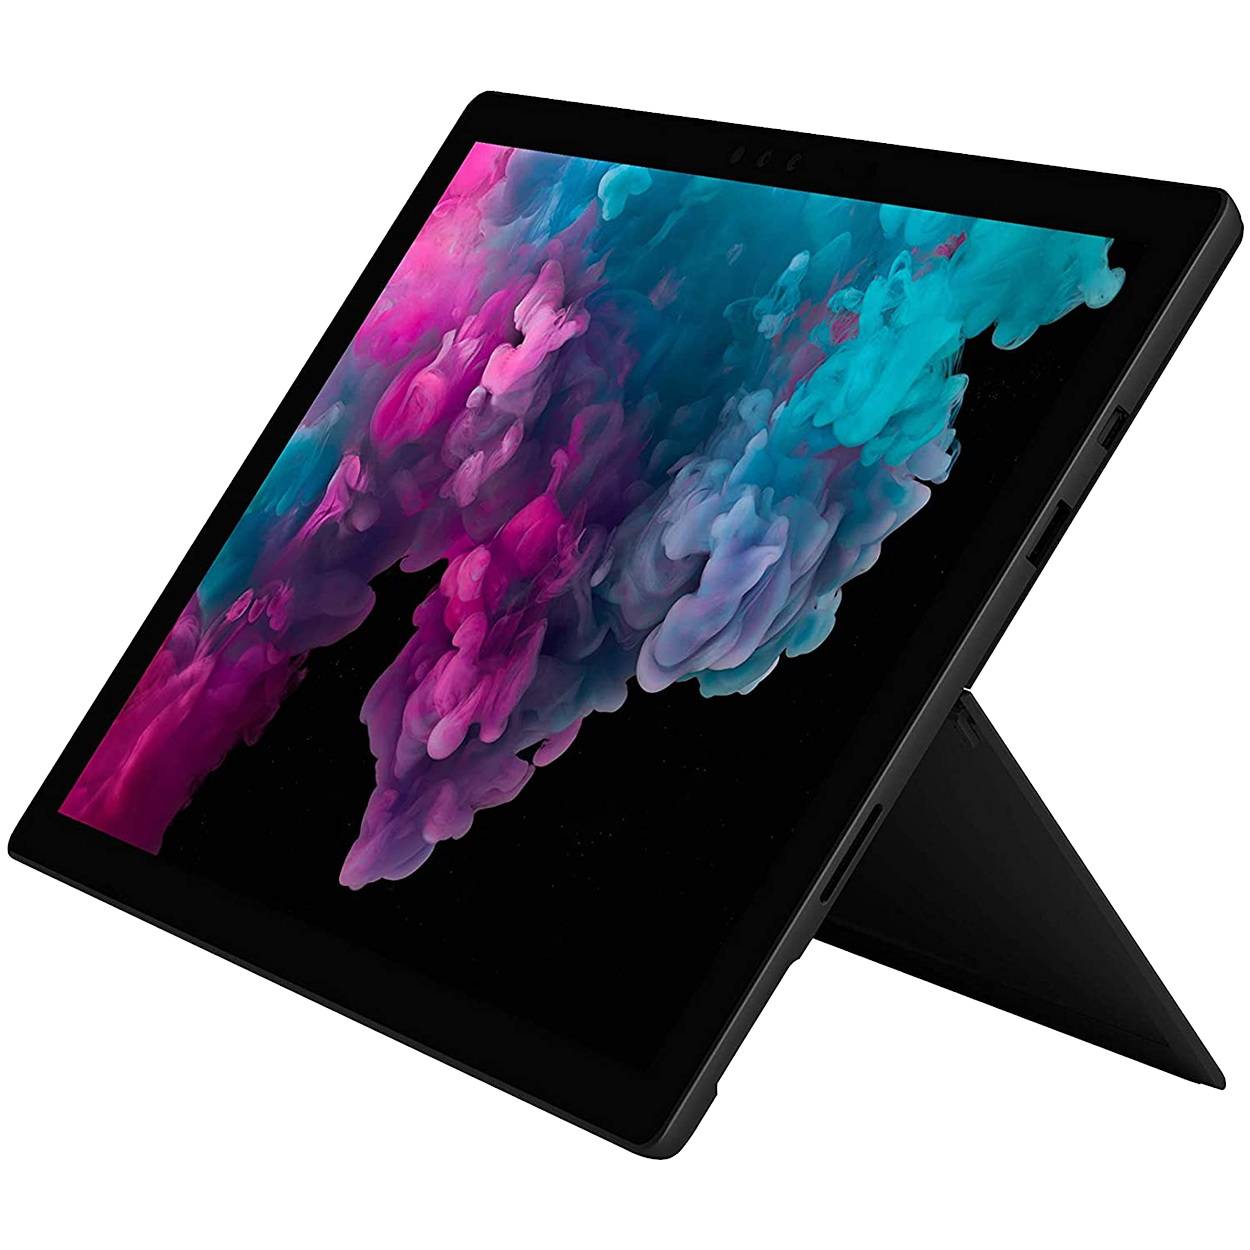 Microsoft Surface Pro 6 12.3" Laptop i5-8250U 256GB 8GB RAM - Very Good Condition